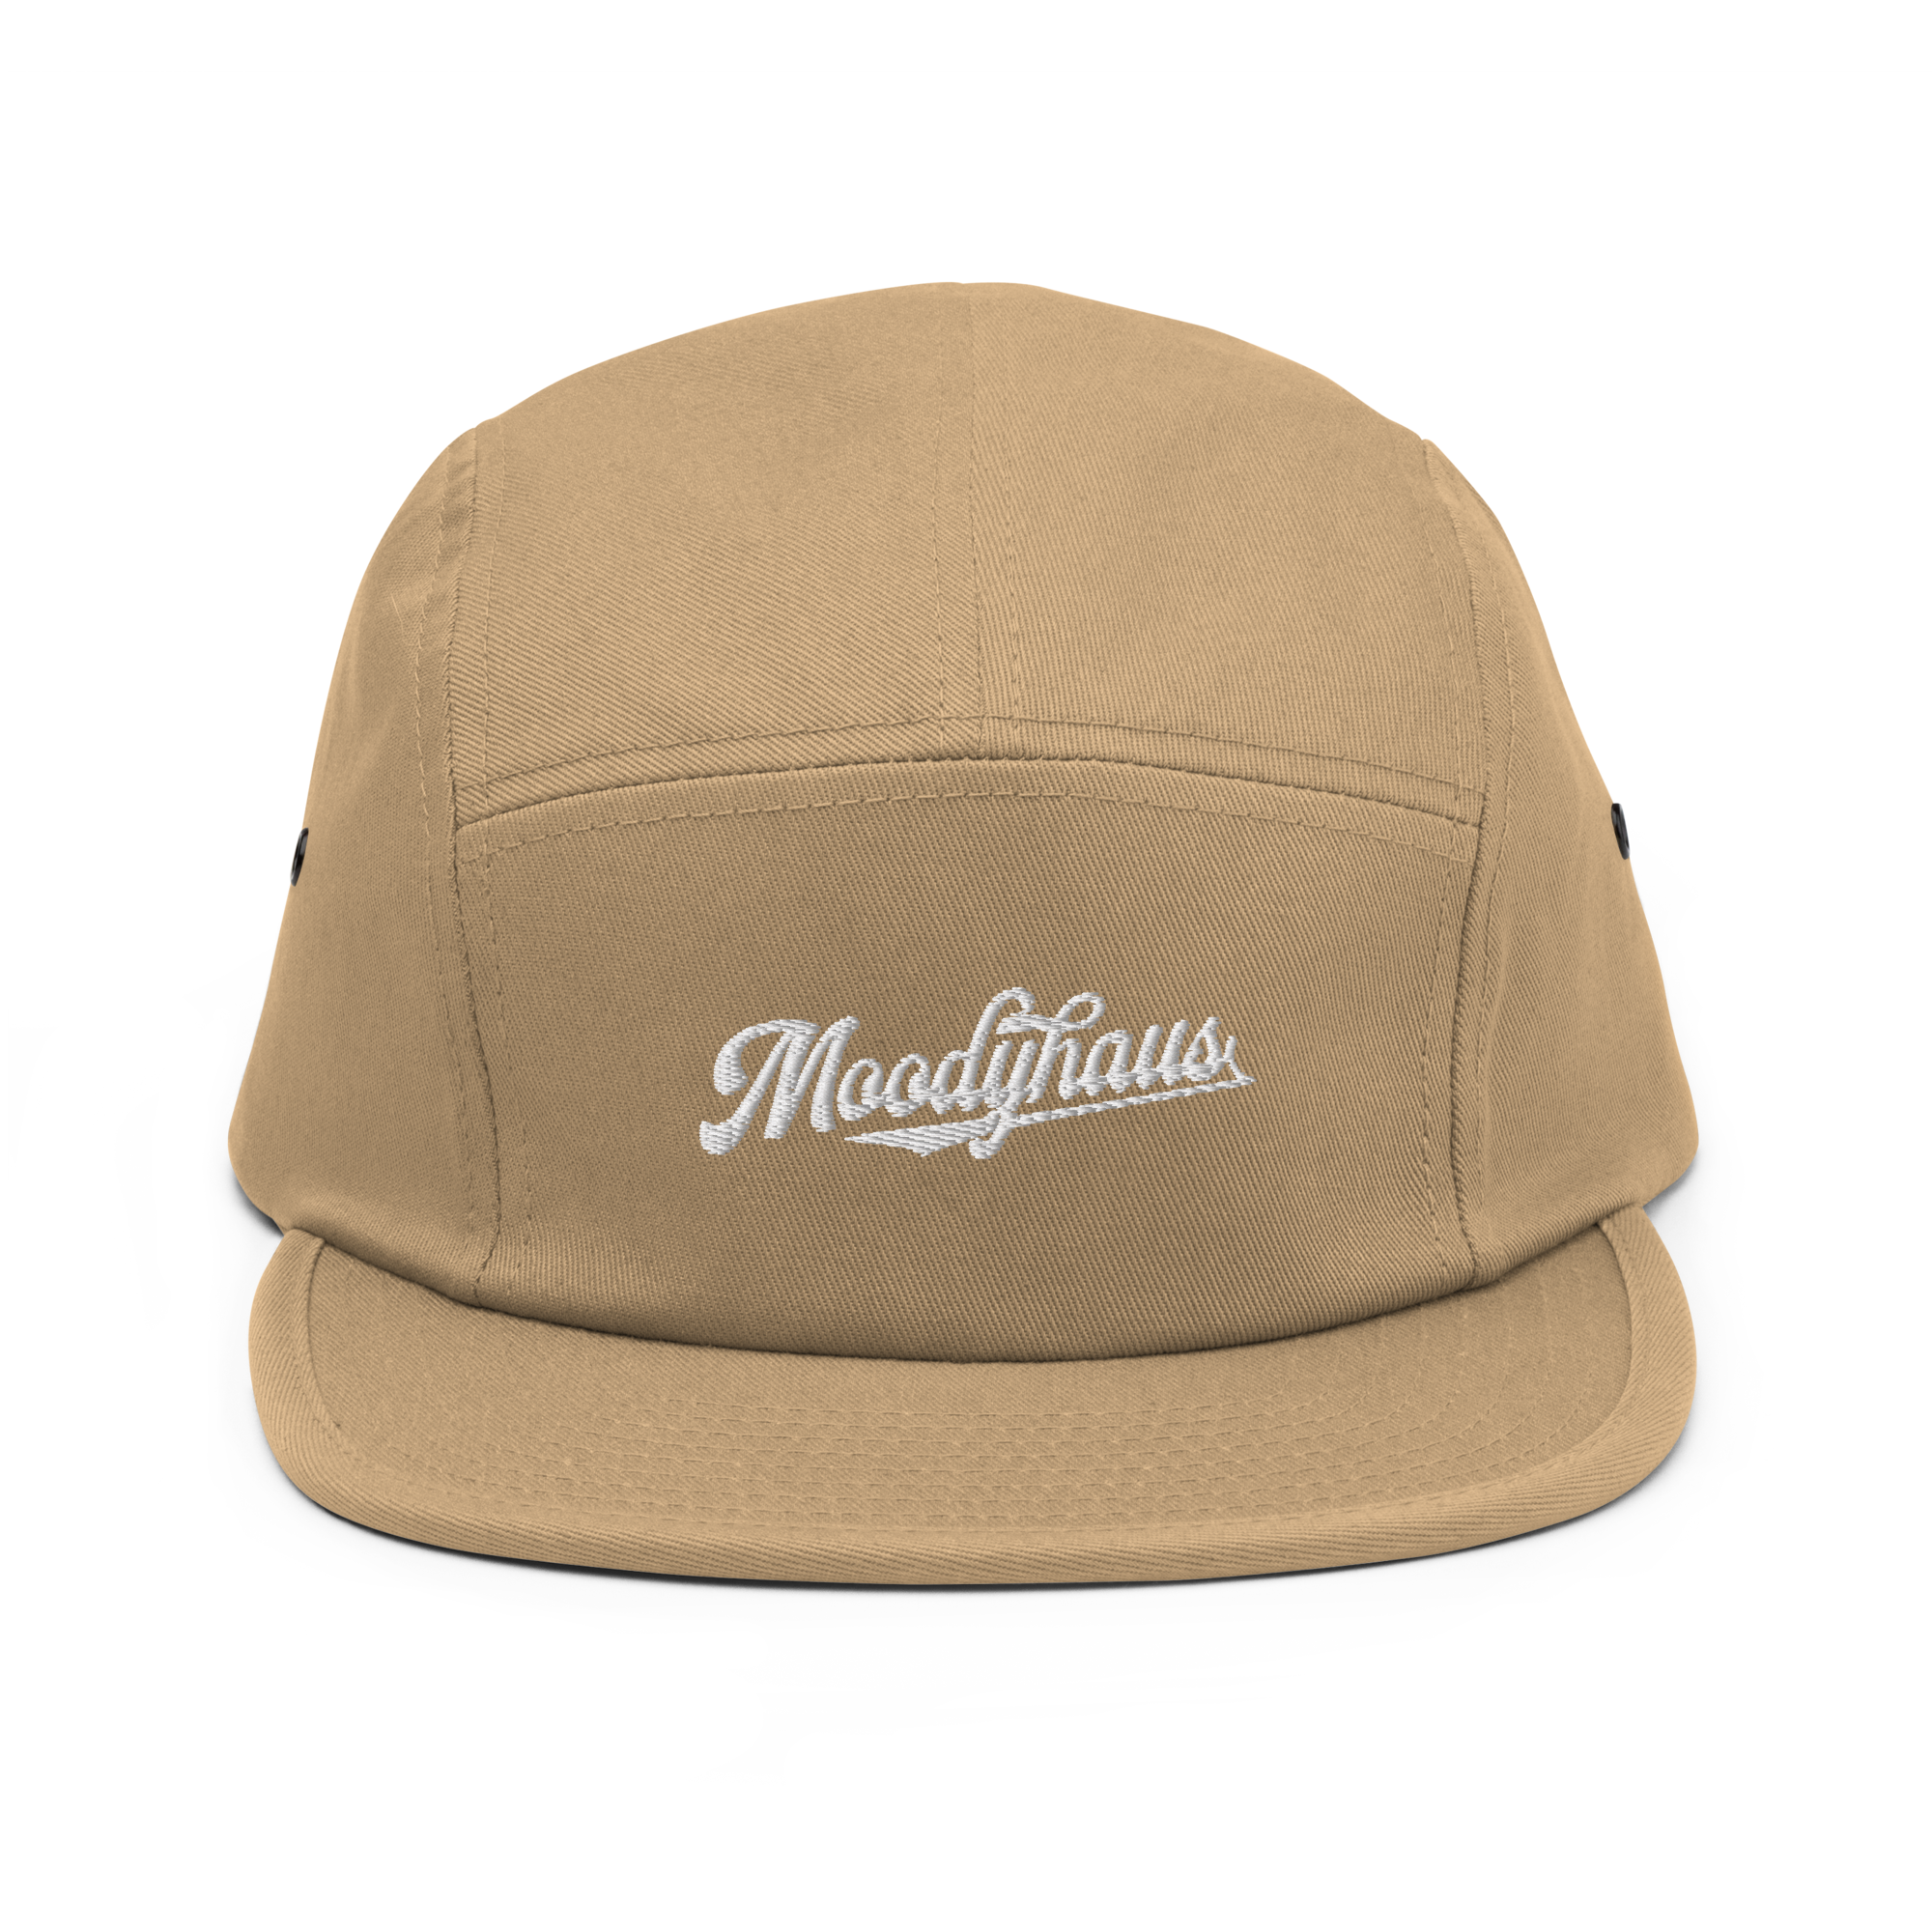 Moodyhaus Five Panel Hat